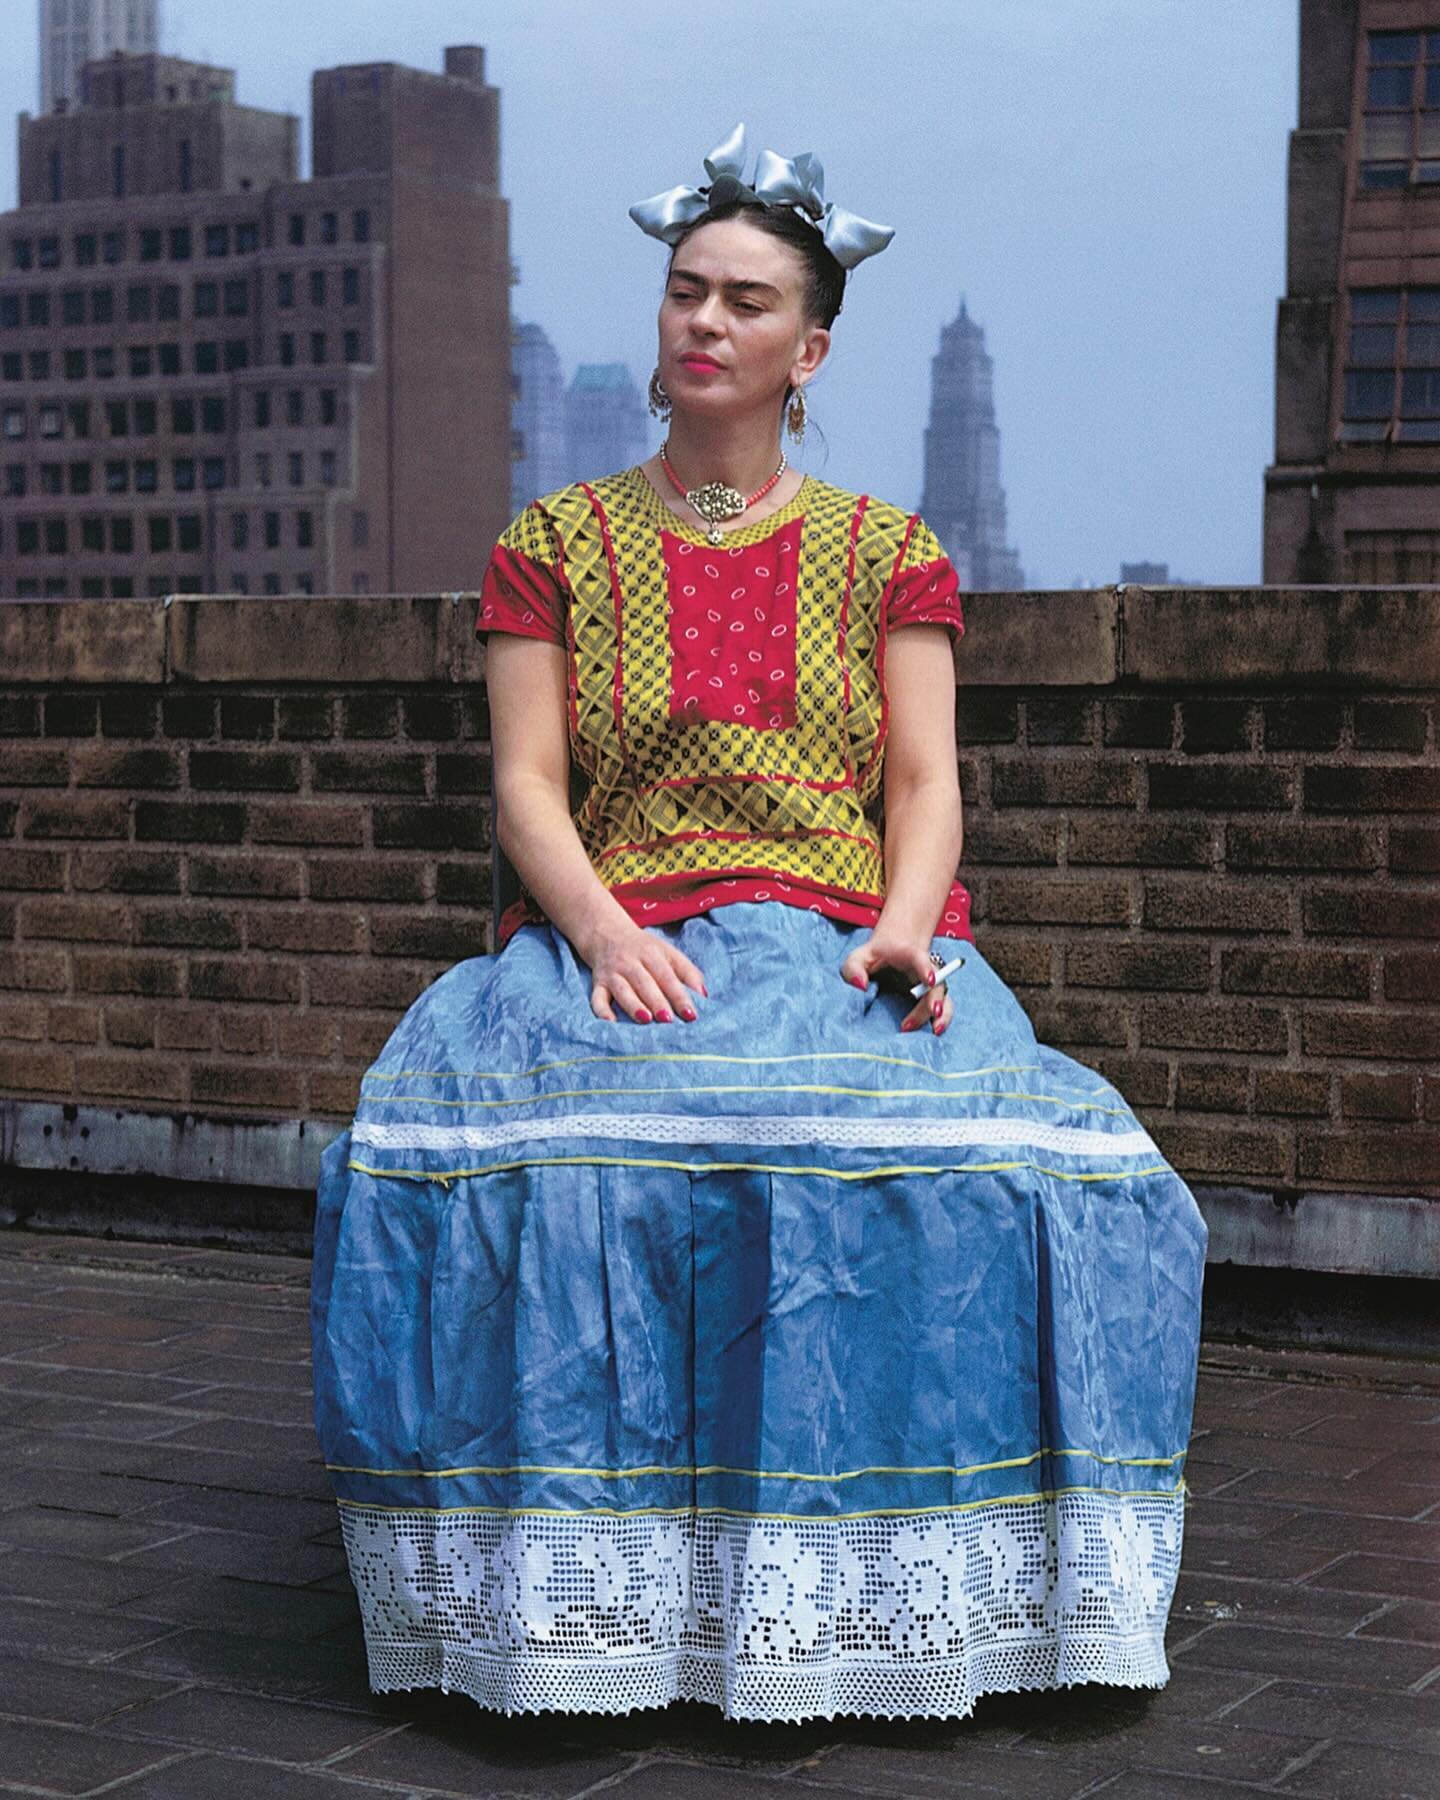 Frida Kahlo in New York by Nickolas Muray, 1939